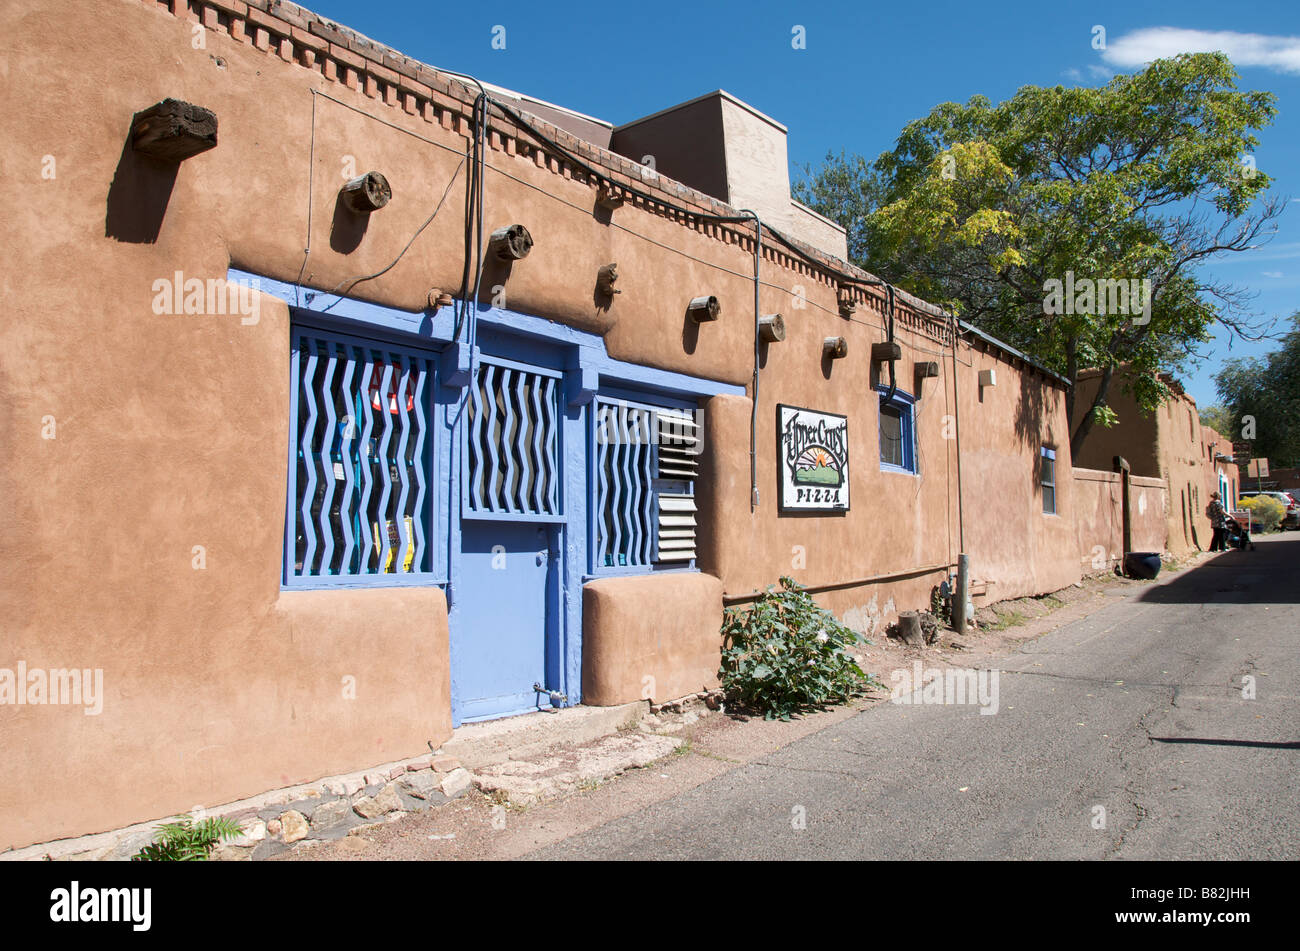 Typical adobe architecture shop front Santa Fe New Mexico USA Stock Photo